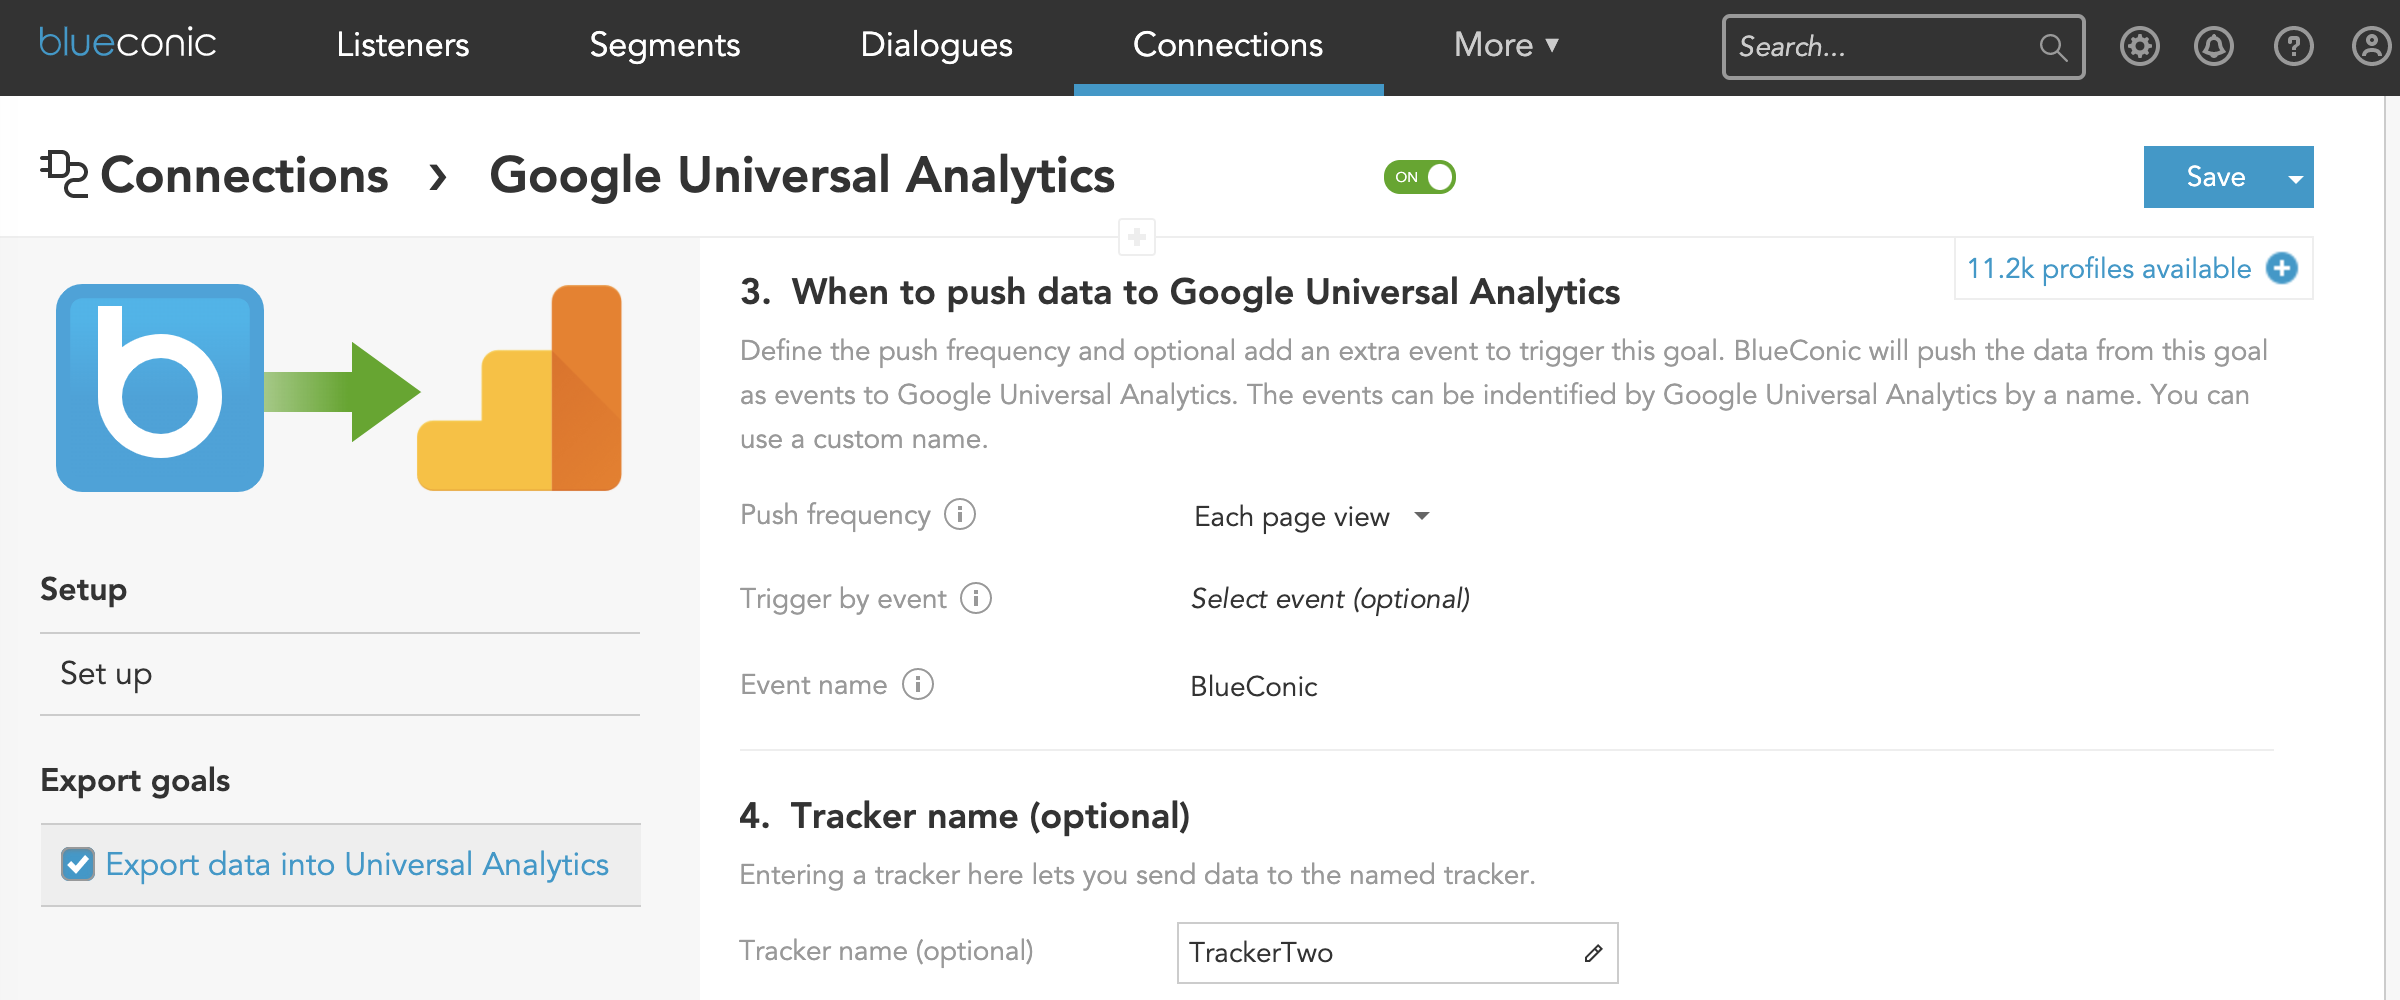 Send-tracker-Google-Universal-Analytics-BlueConic.png